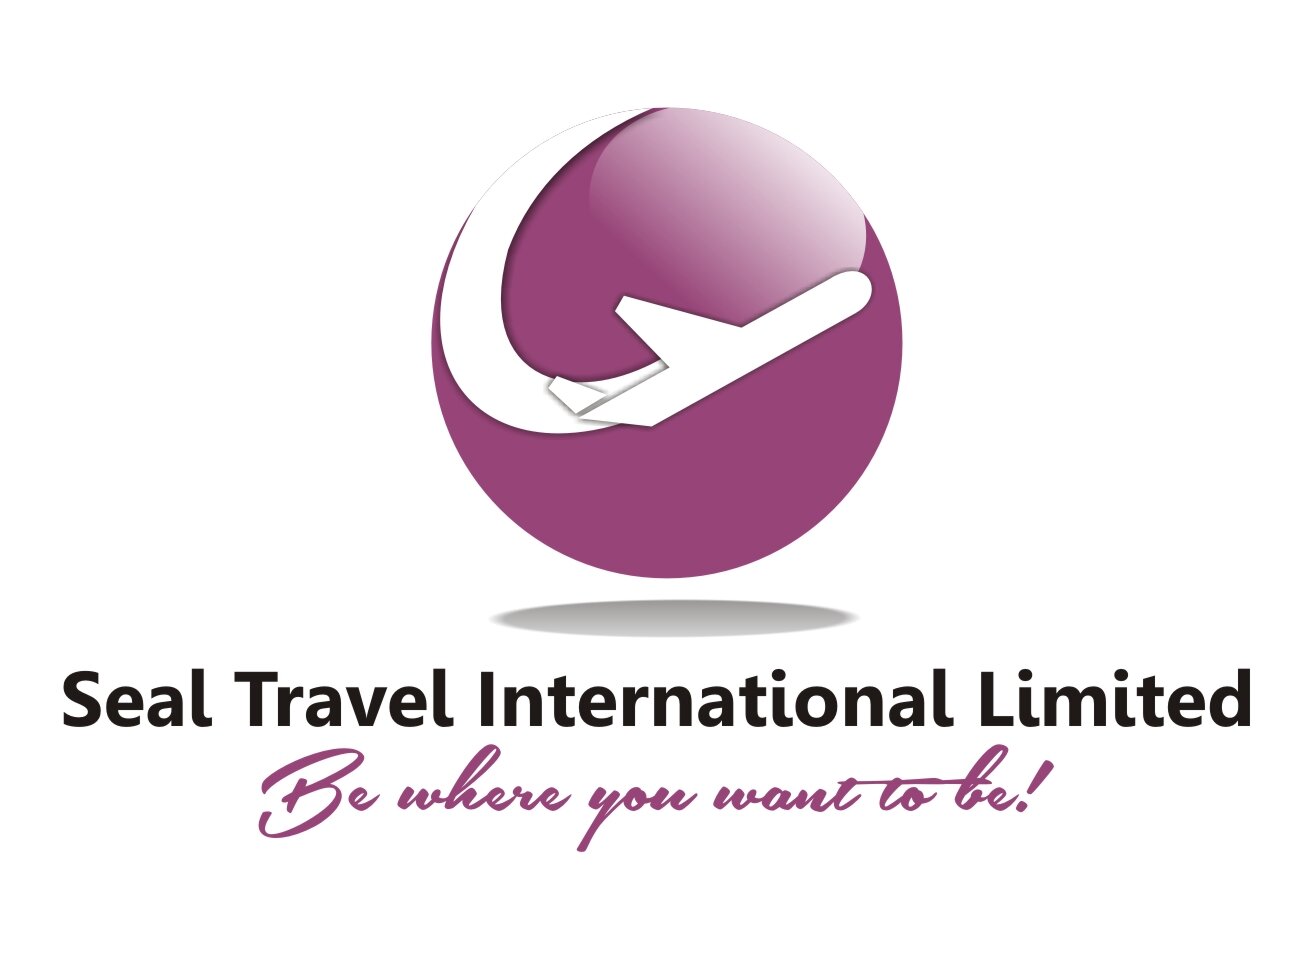 Official Website of Seal Travel International
Tss Tower, 5th flr, Mombasa Kenya